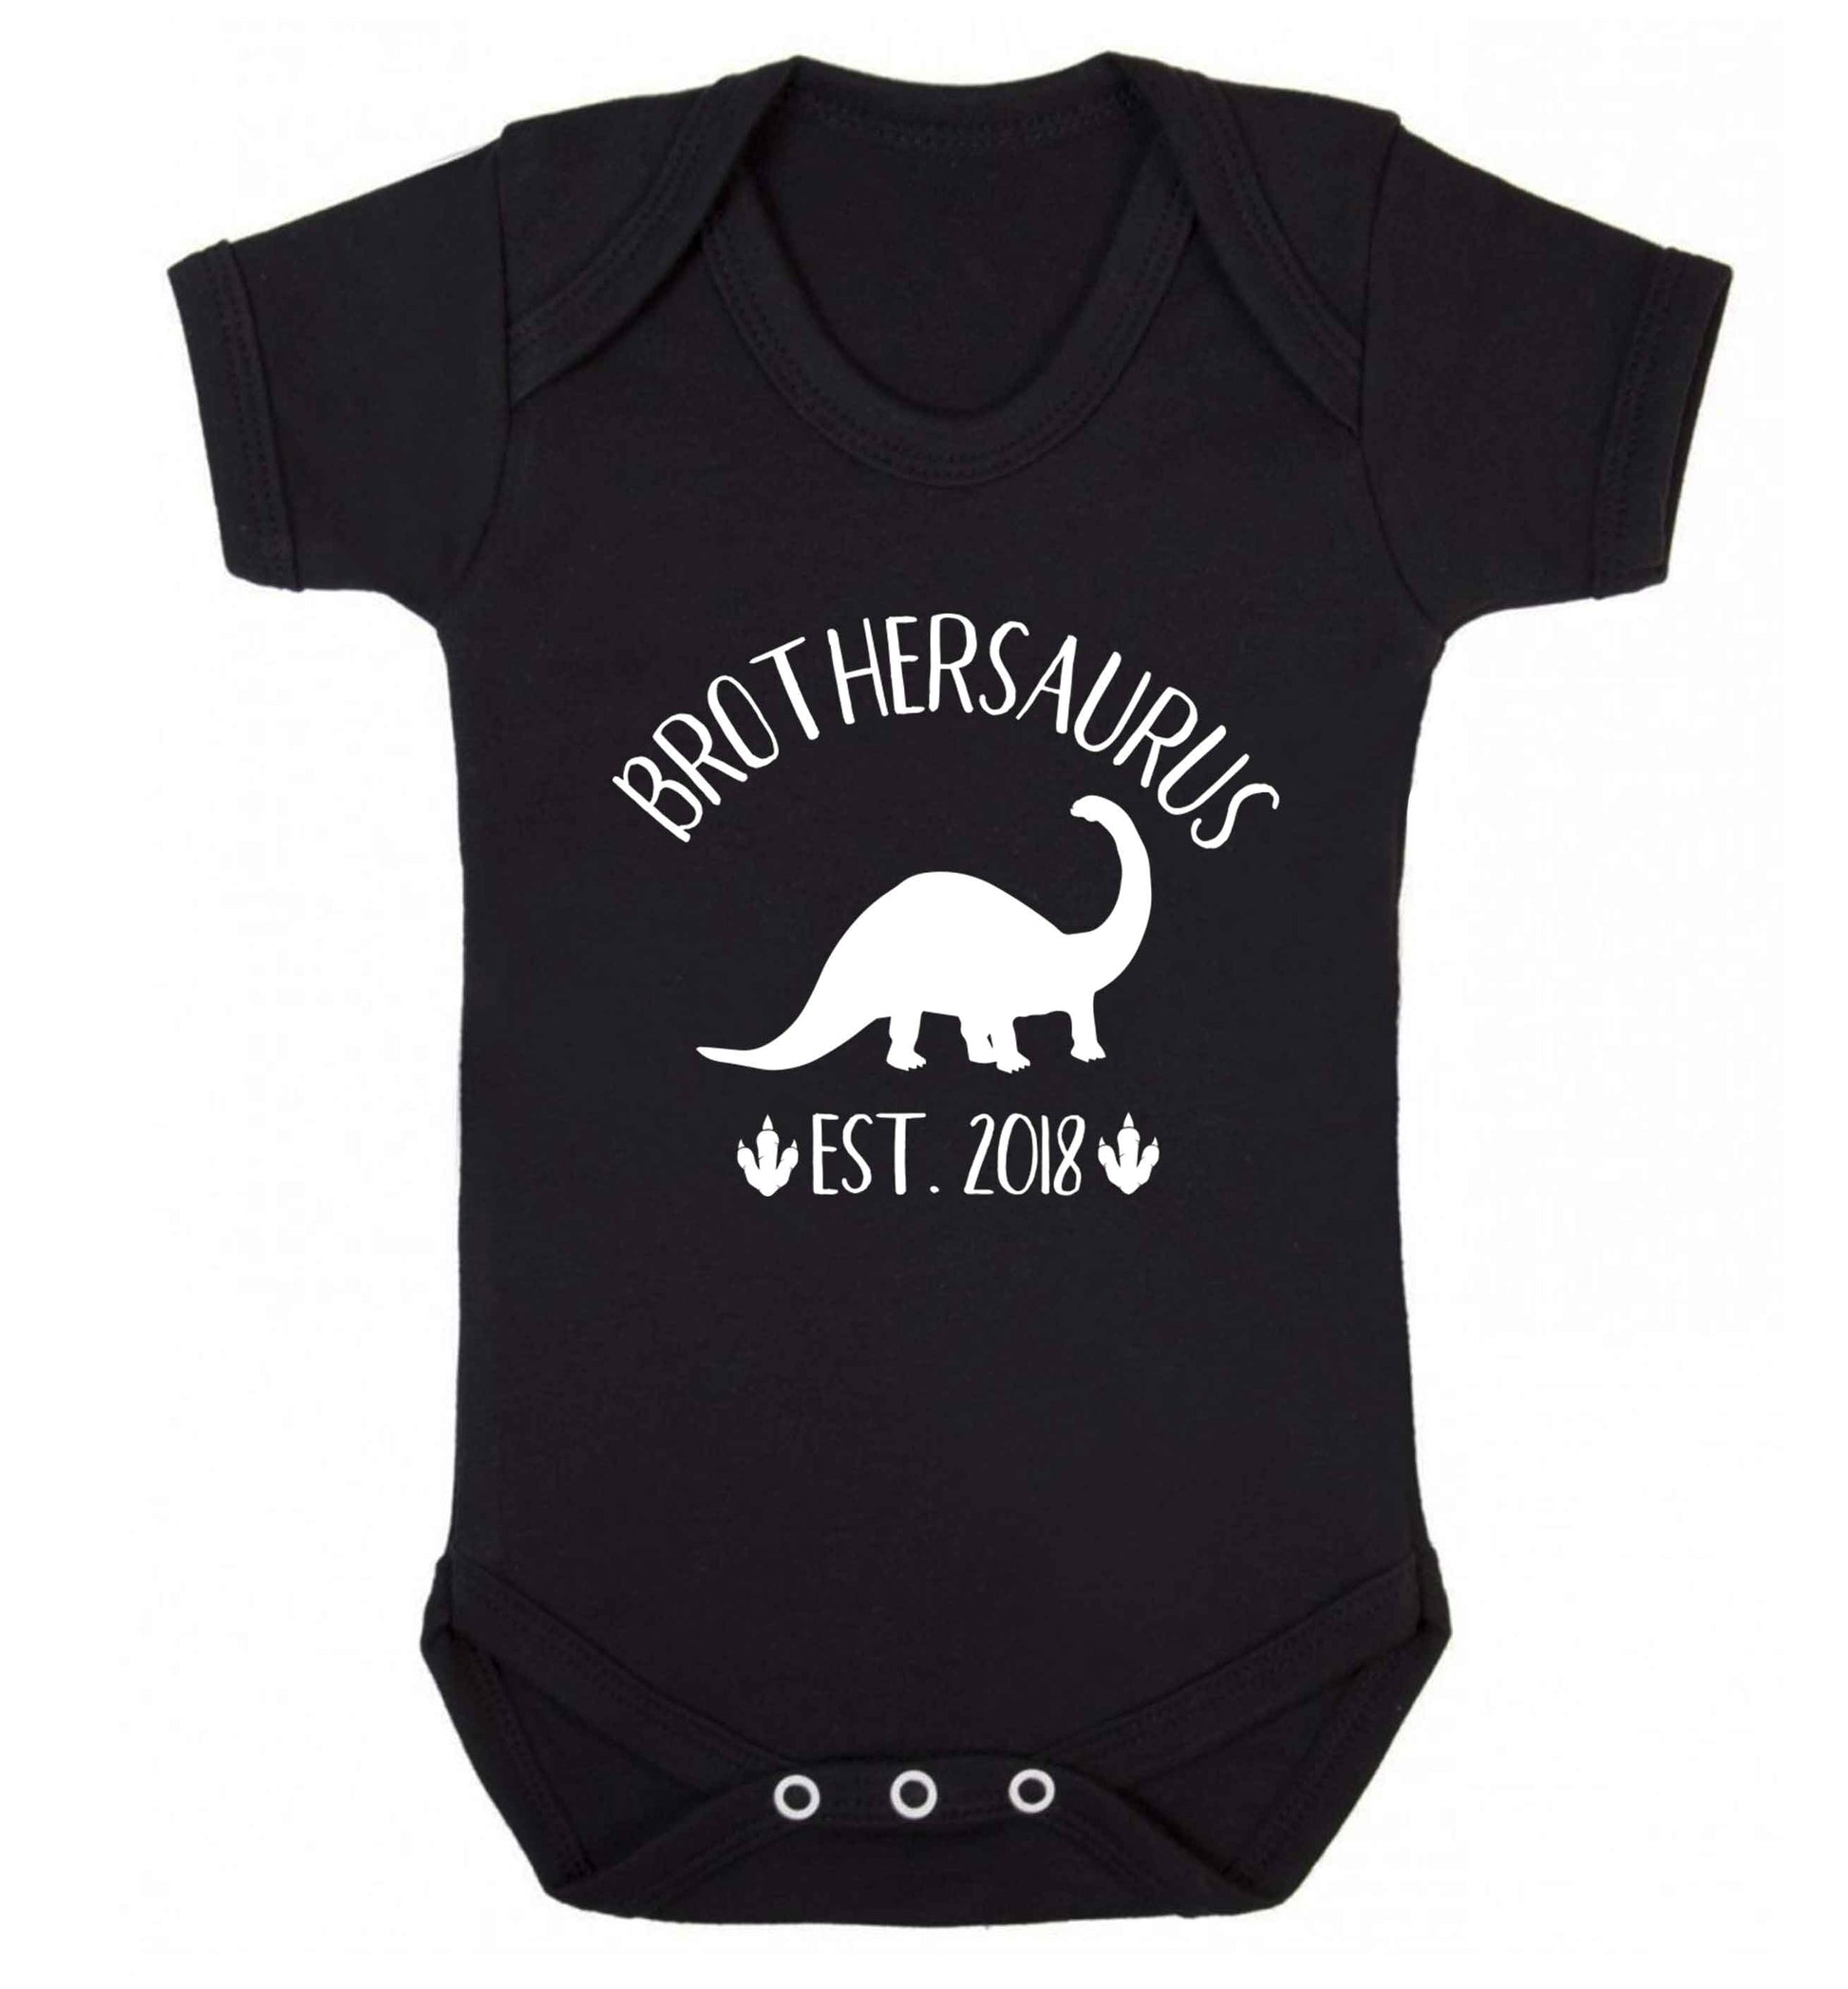 Personalised brothersaurus since (custom date) Baby Vest black 18-24 months